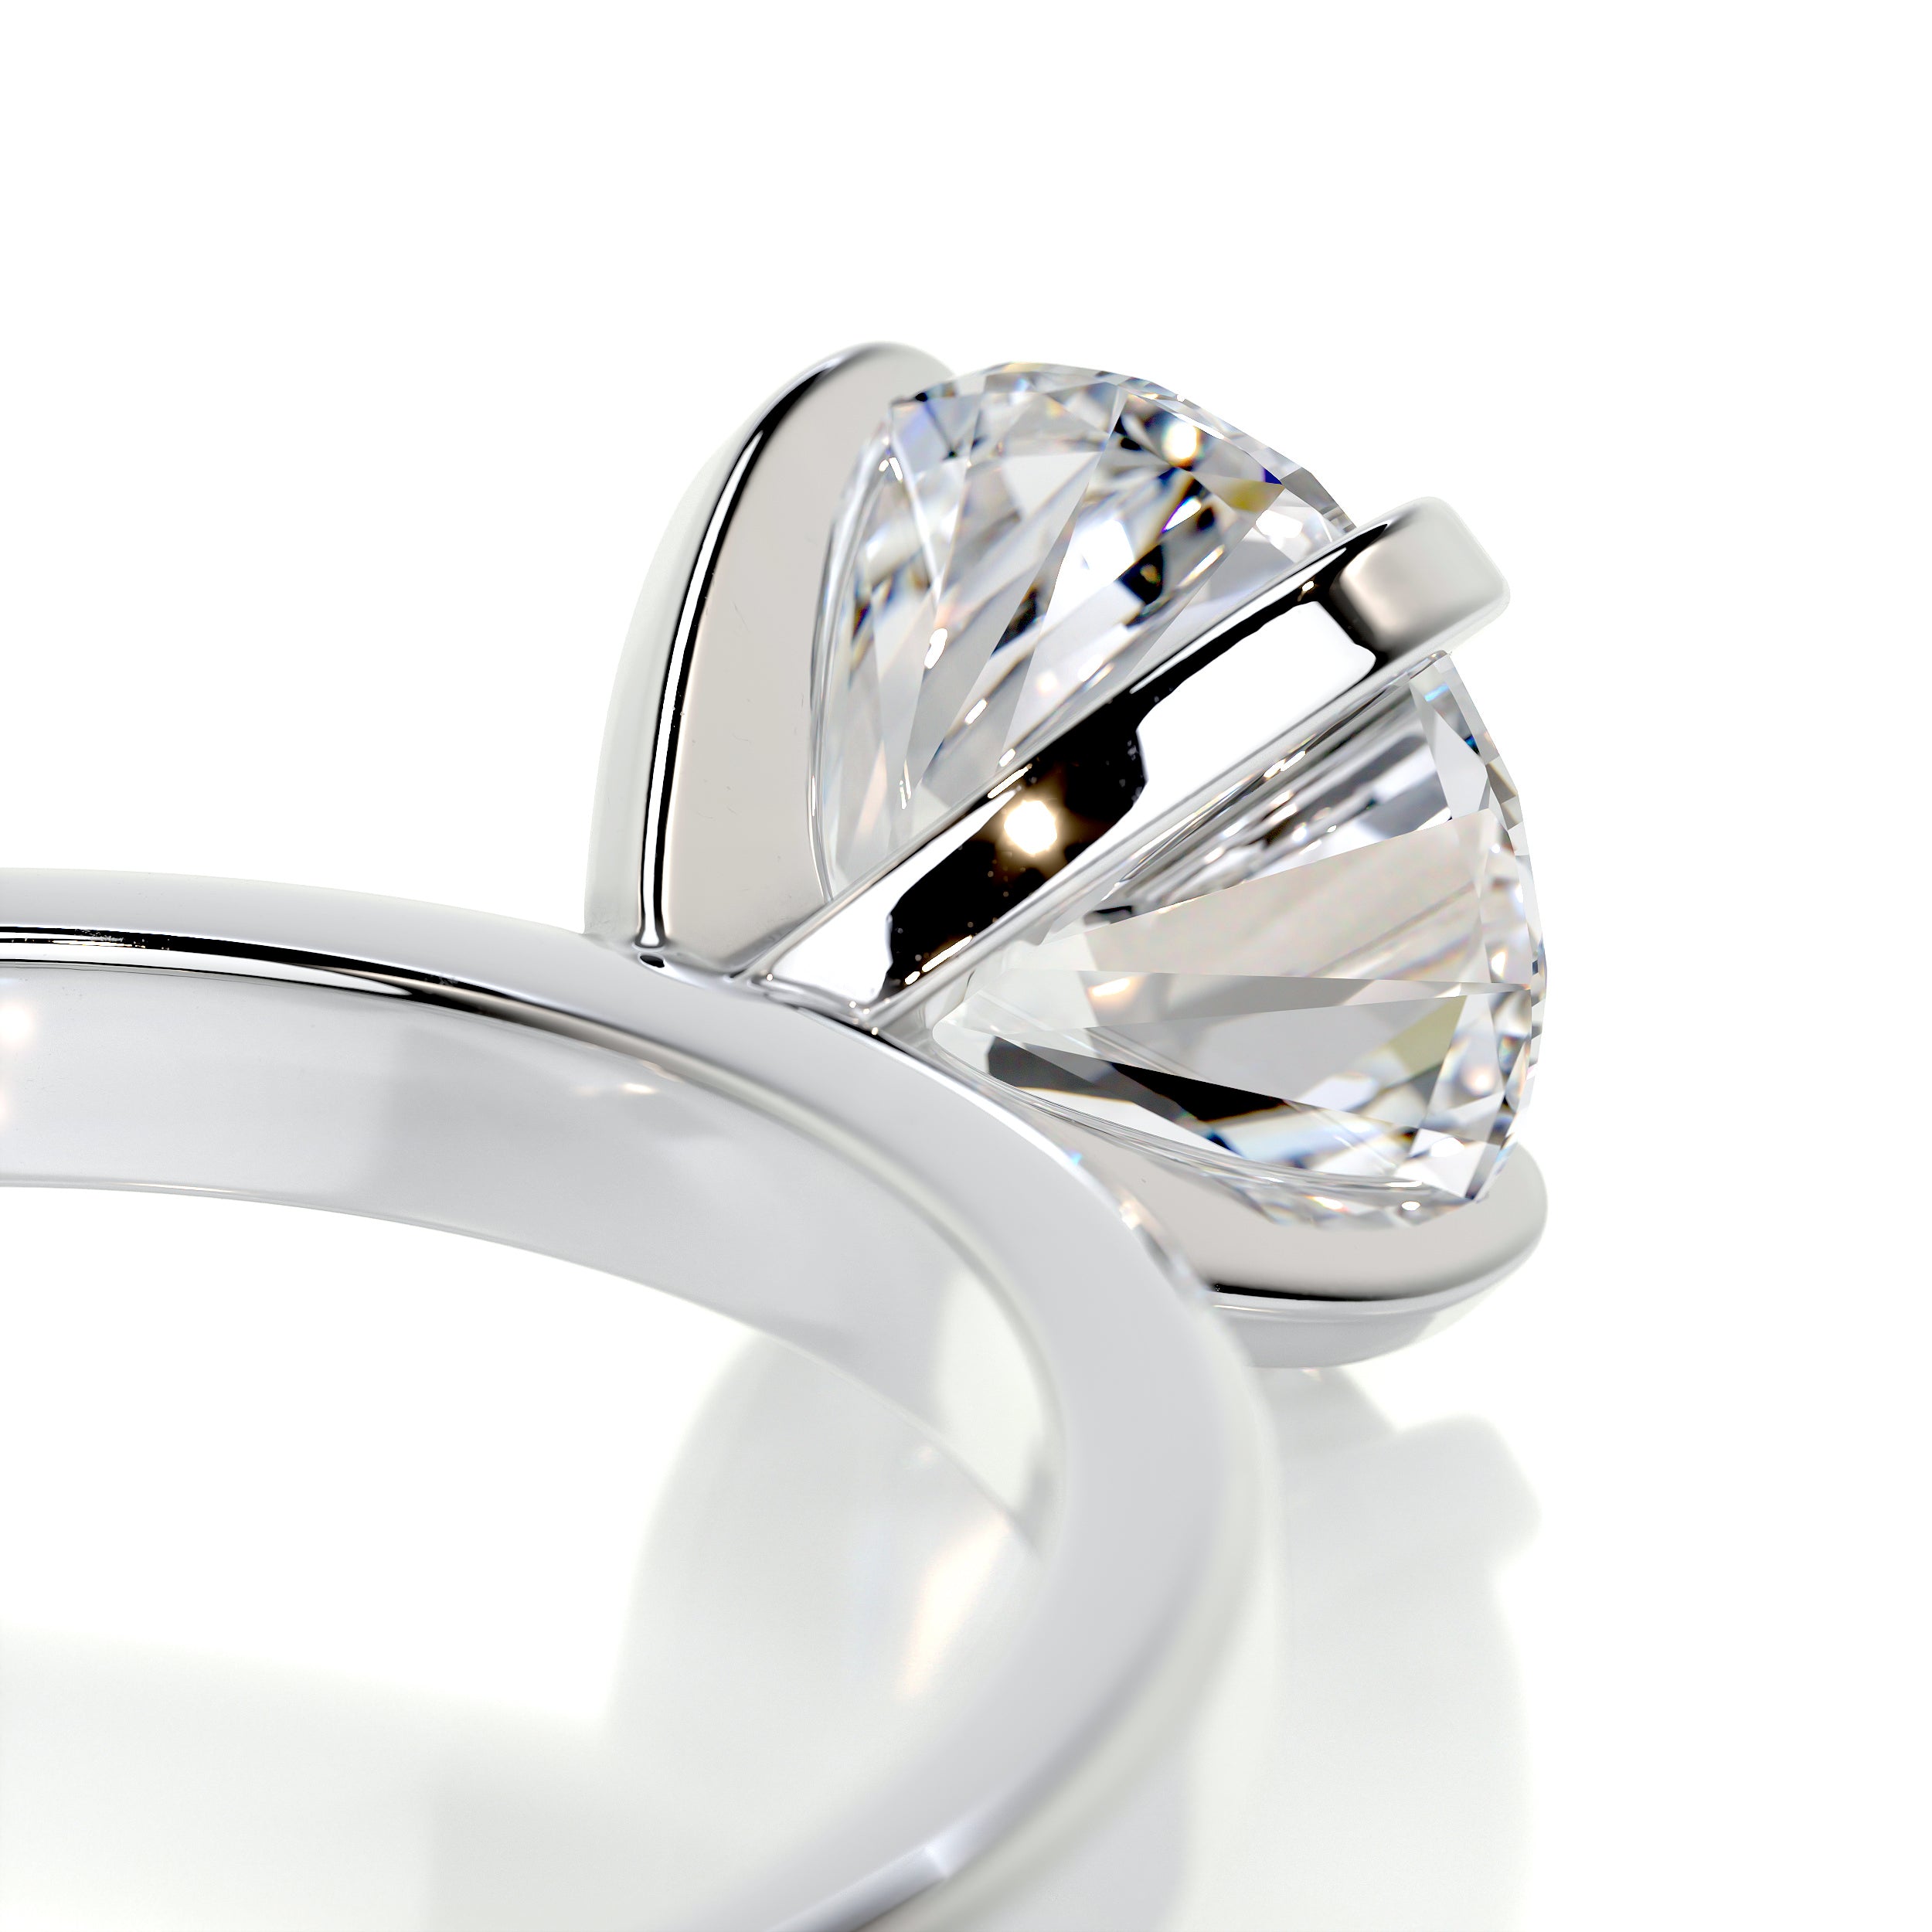 Jessica Diamond Engagement Ring   (1 Carat) -14K White Gold